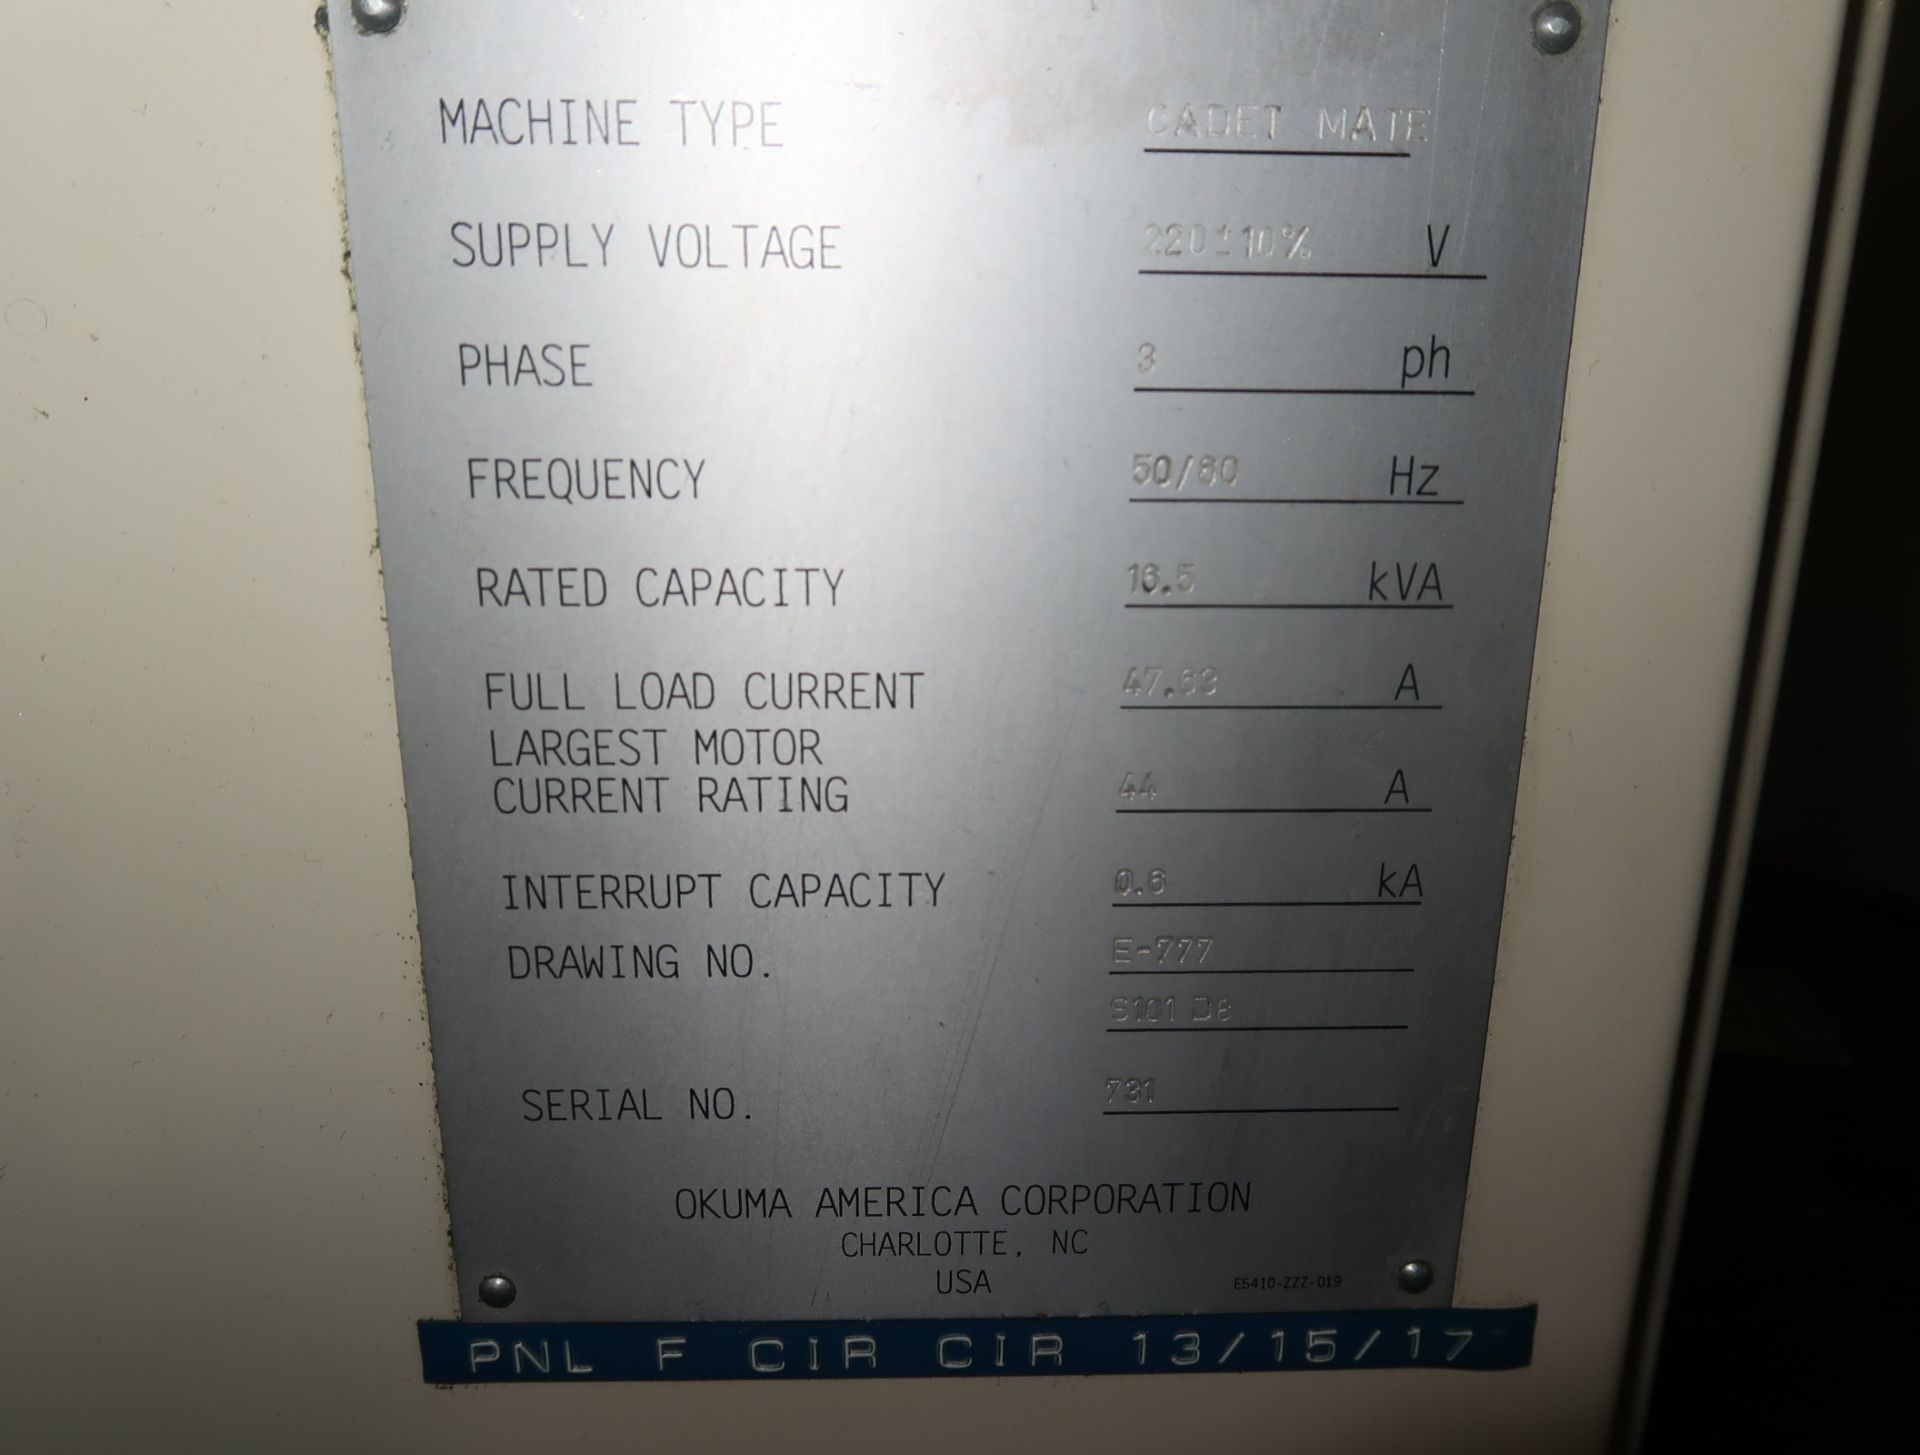 1998 OKUMA CADET-MATE 4020 CNC VERTICAL MACHINING CENTER, OSP-700M CONTROL, SN. 731 - Image 6 of 8